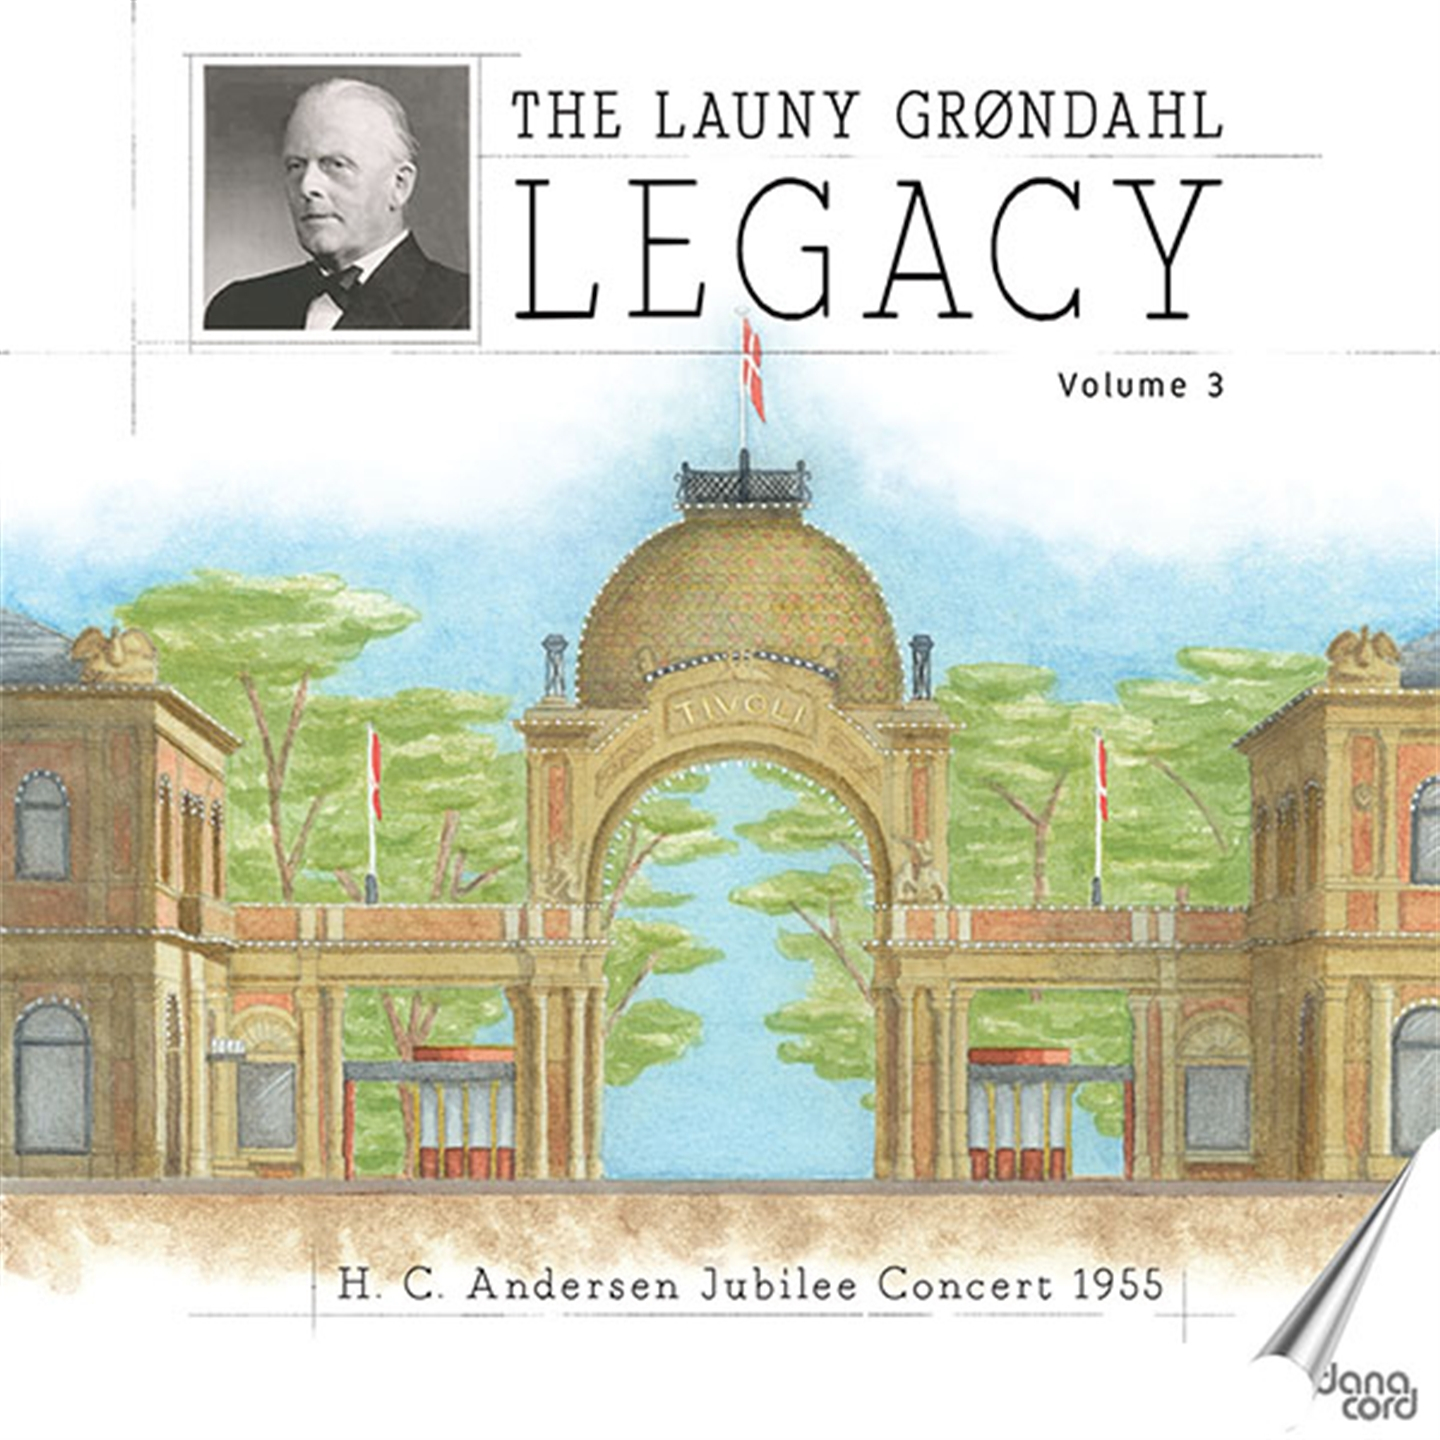 Drso, Launy Grondahl - The Launy Grondahl Legacy Vol.3 - H.C. Andersen Jubilee - Bild 1 von 1